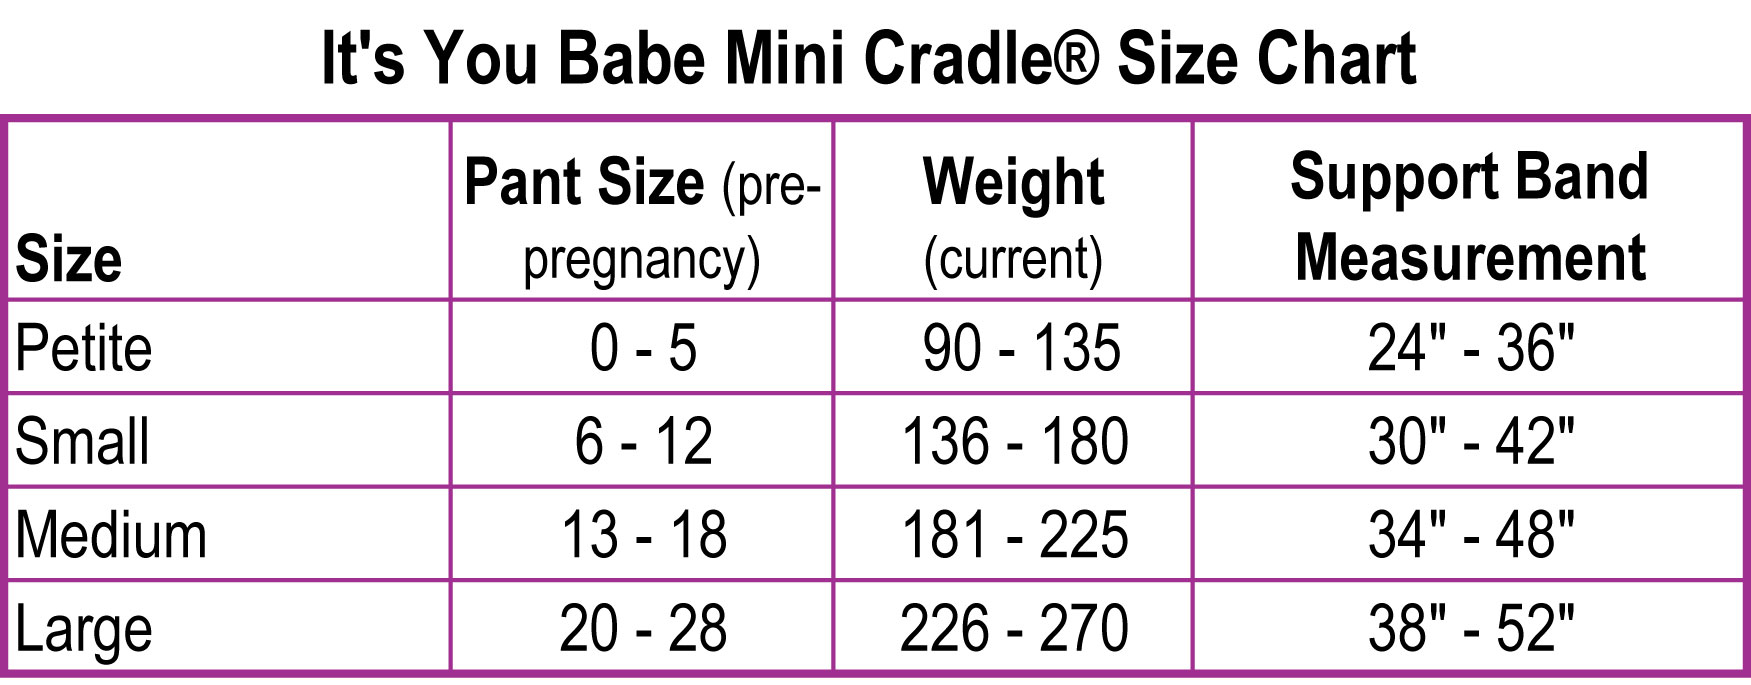 https://itsyoubabe.com/wp-content/uploads/2020/08/Mini-Cradle-Size-Chart-for-Website.jpg